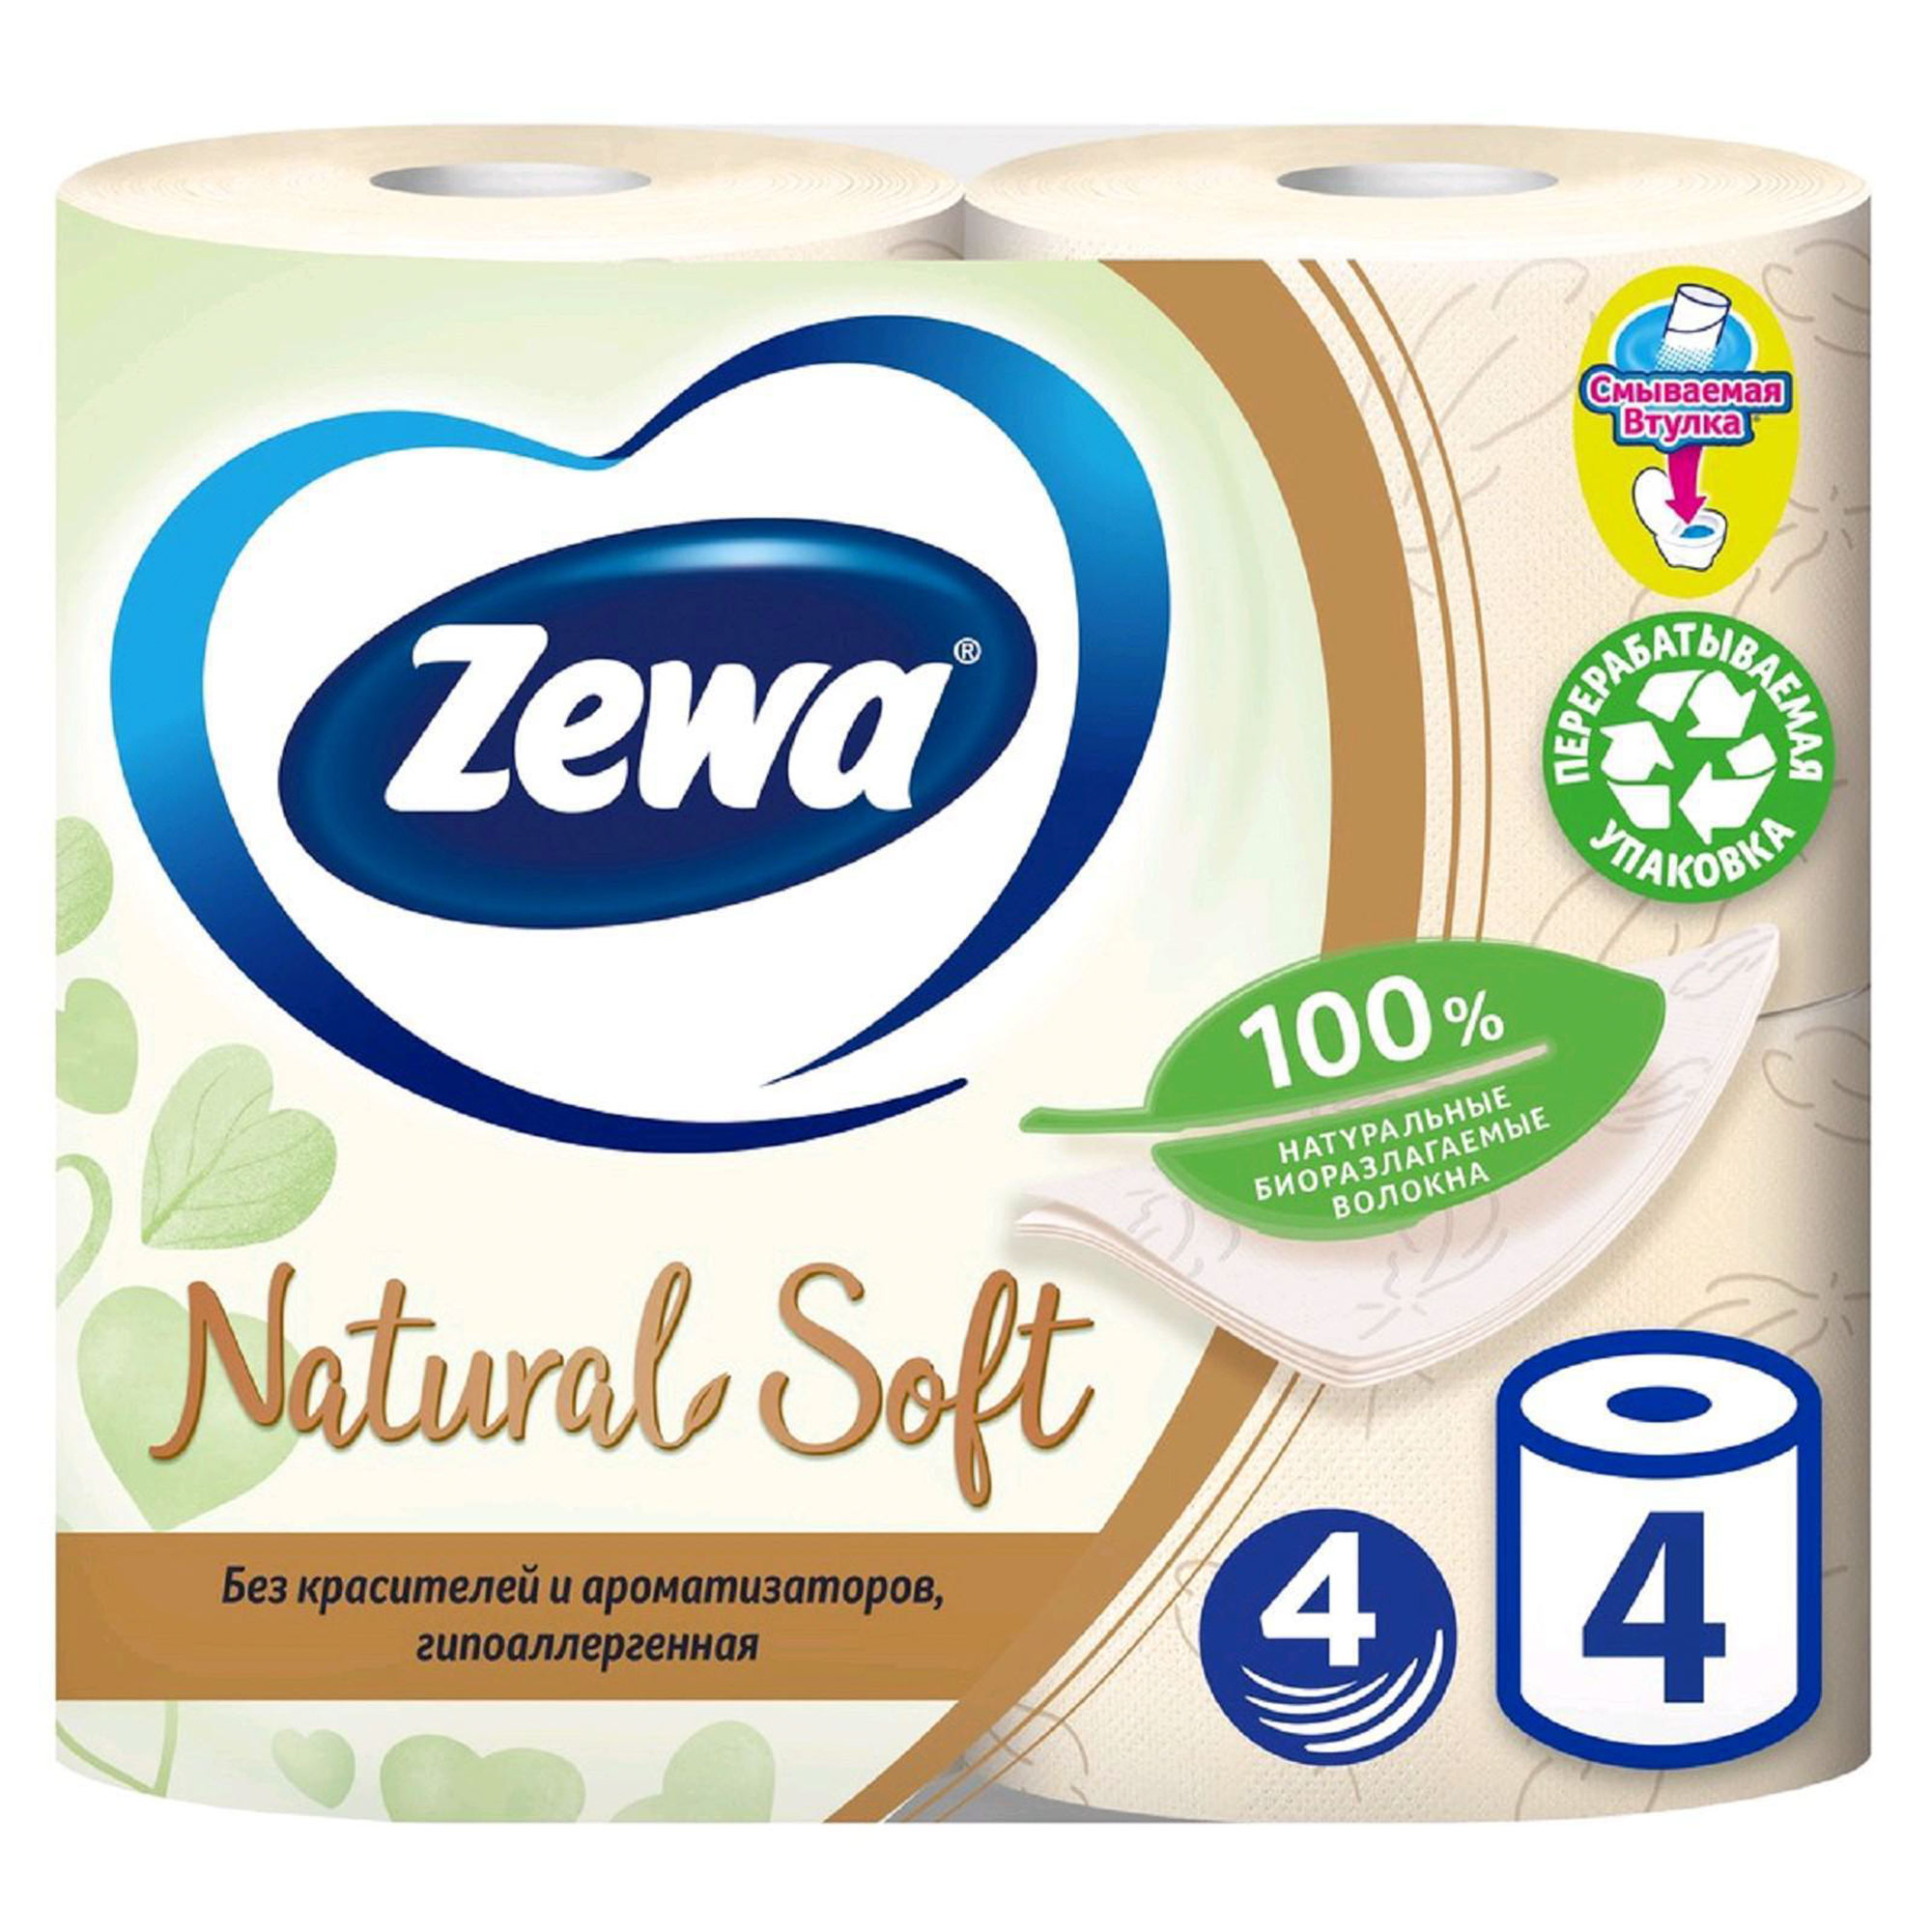 Туалетная бумага Zewa Natural Soft четырехслойная 4 шт туалетная бумага zewa deluxe белая 3 слоя 12 рулонов